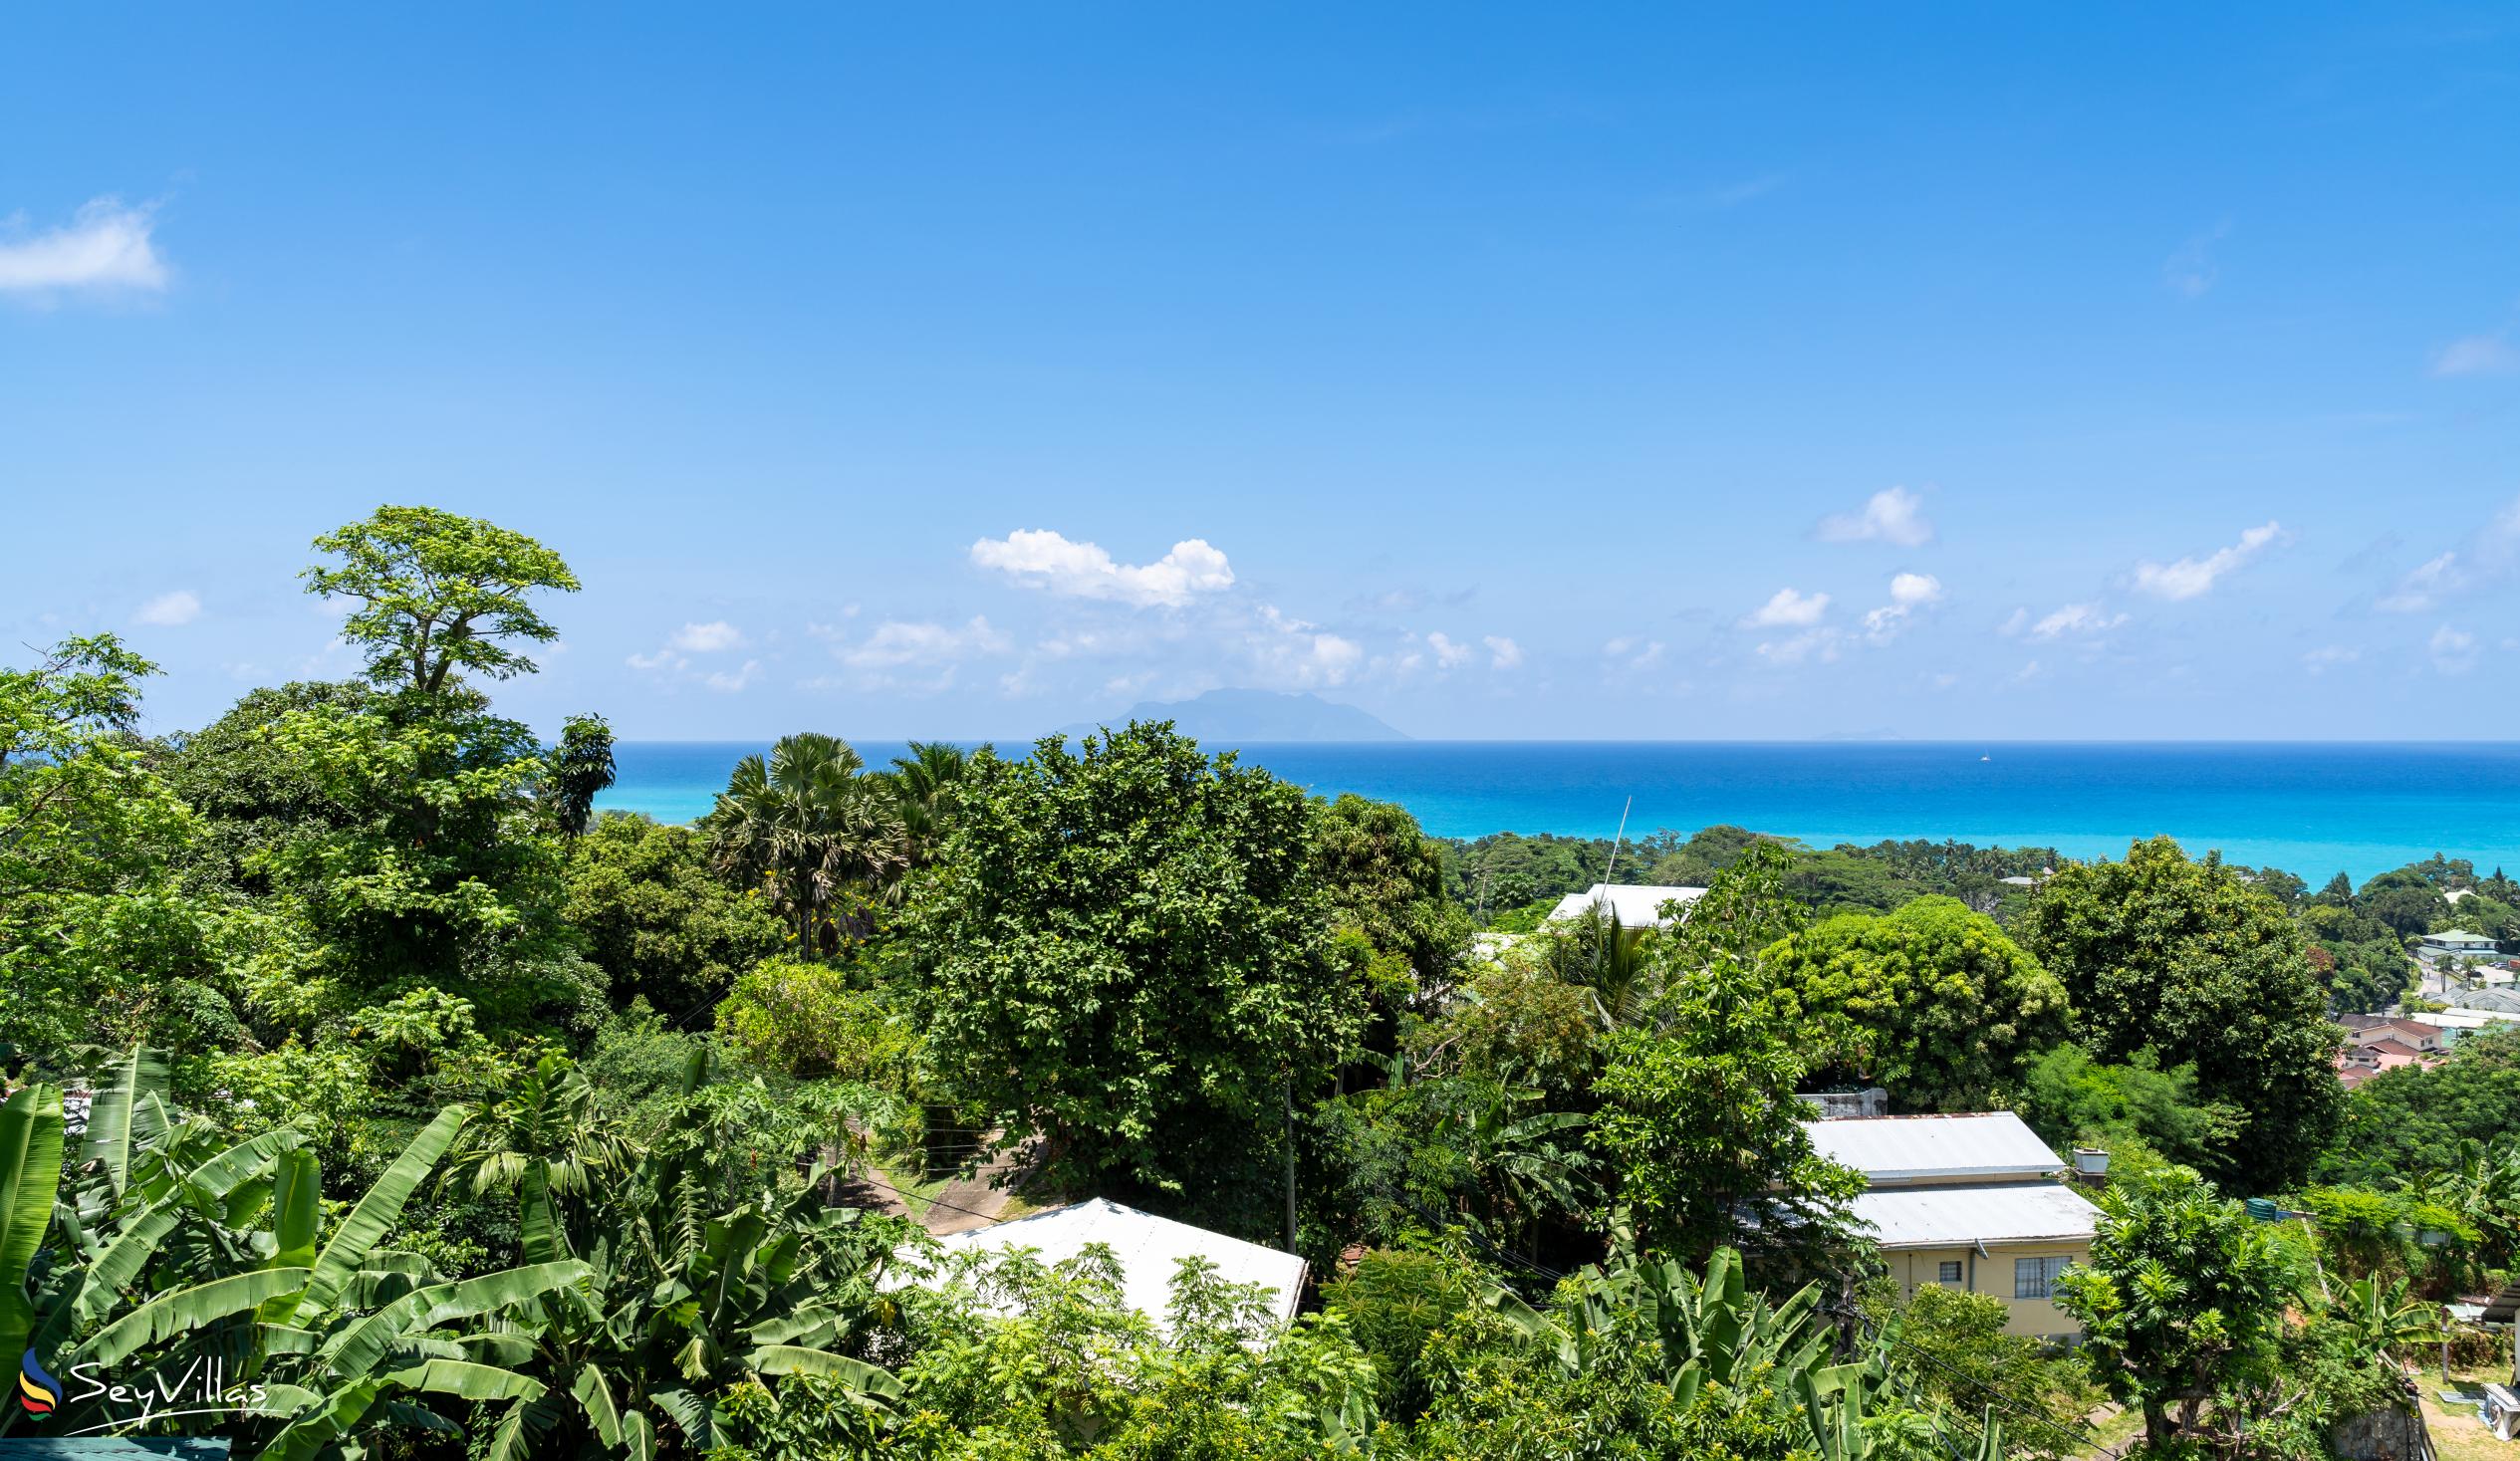 Foto 16: Tama's Holiday Apartments - Posizione - Mahé (Seychelles)